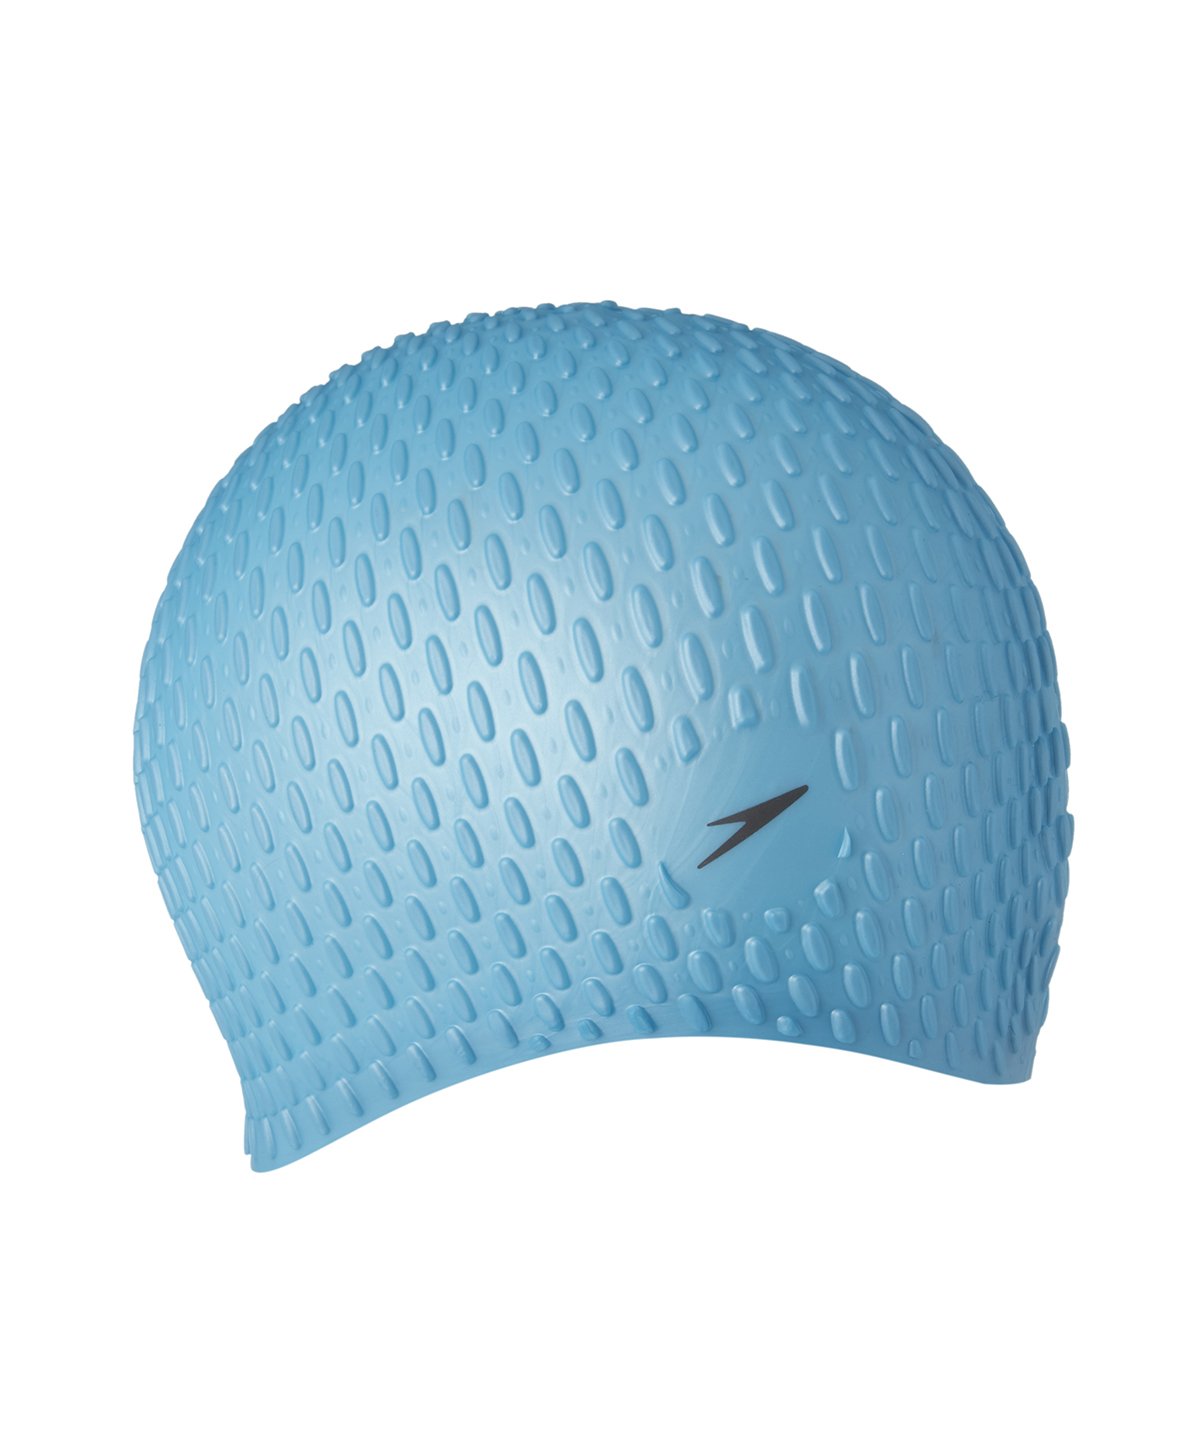 Speedo Unisex-Adult Bubble Swimcap (Assorted Color) - Best Price online Prokicksports.com